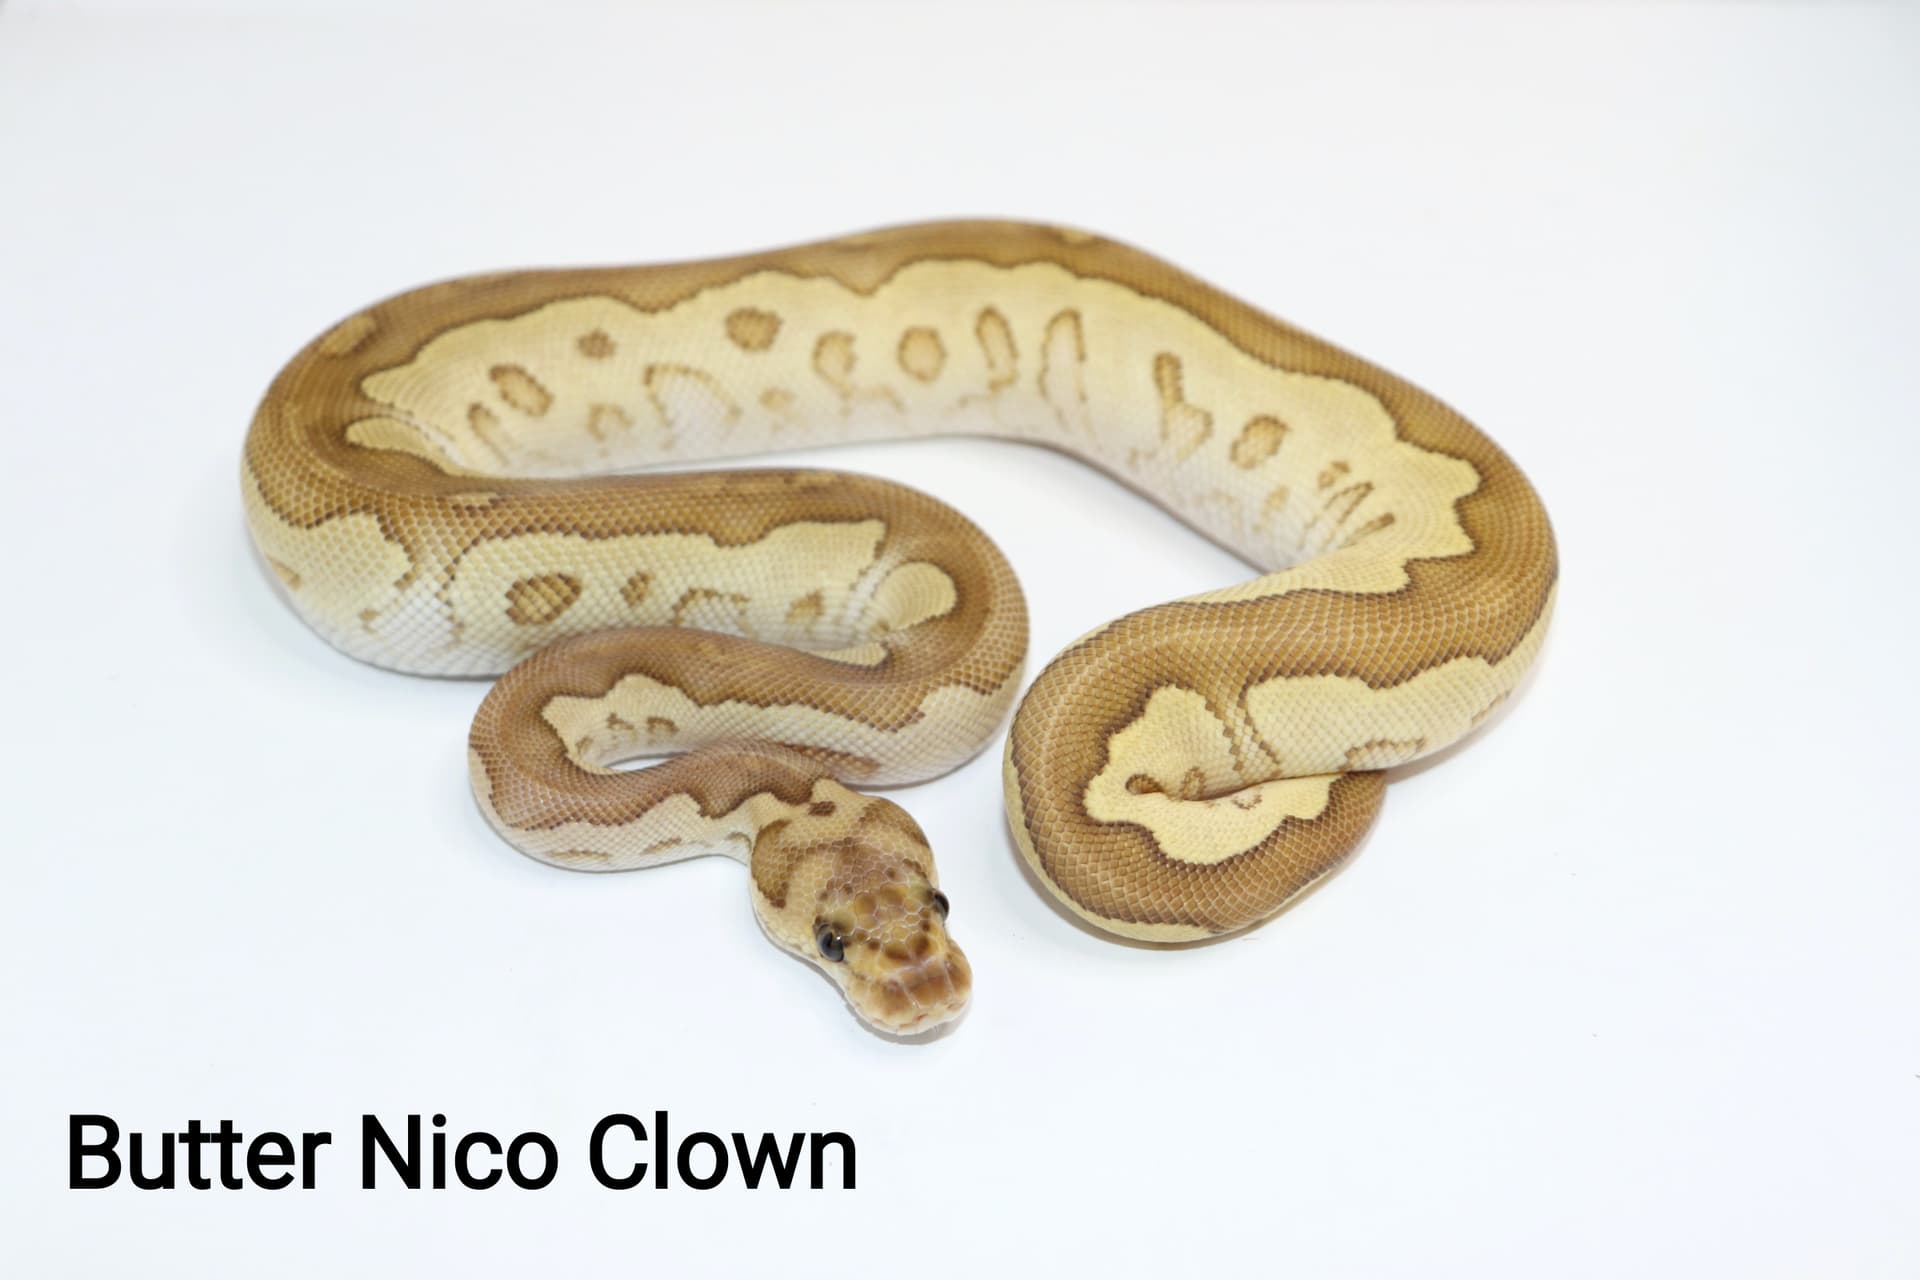 Butter Nico Clown by DNJ Pythons